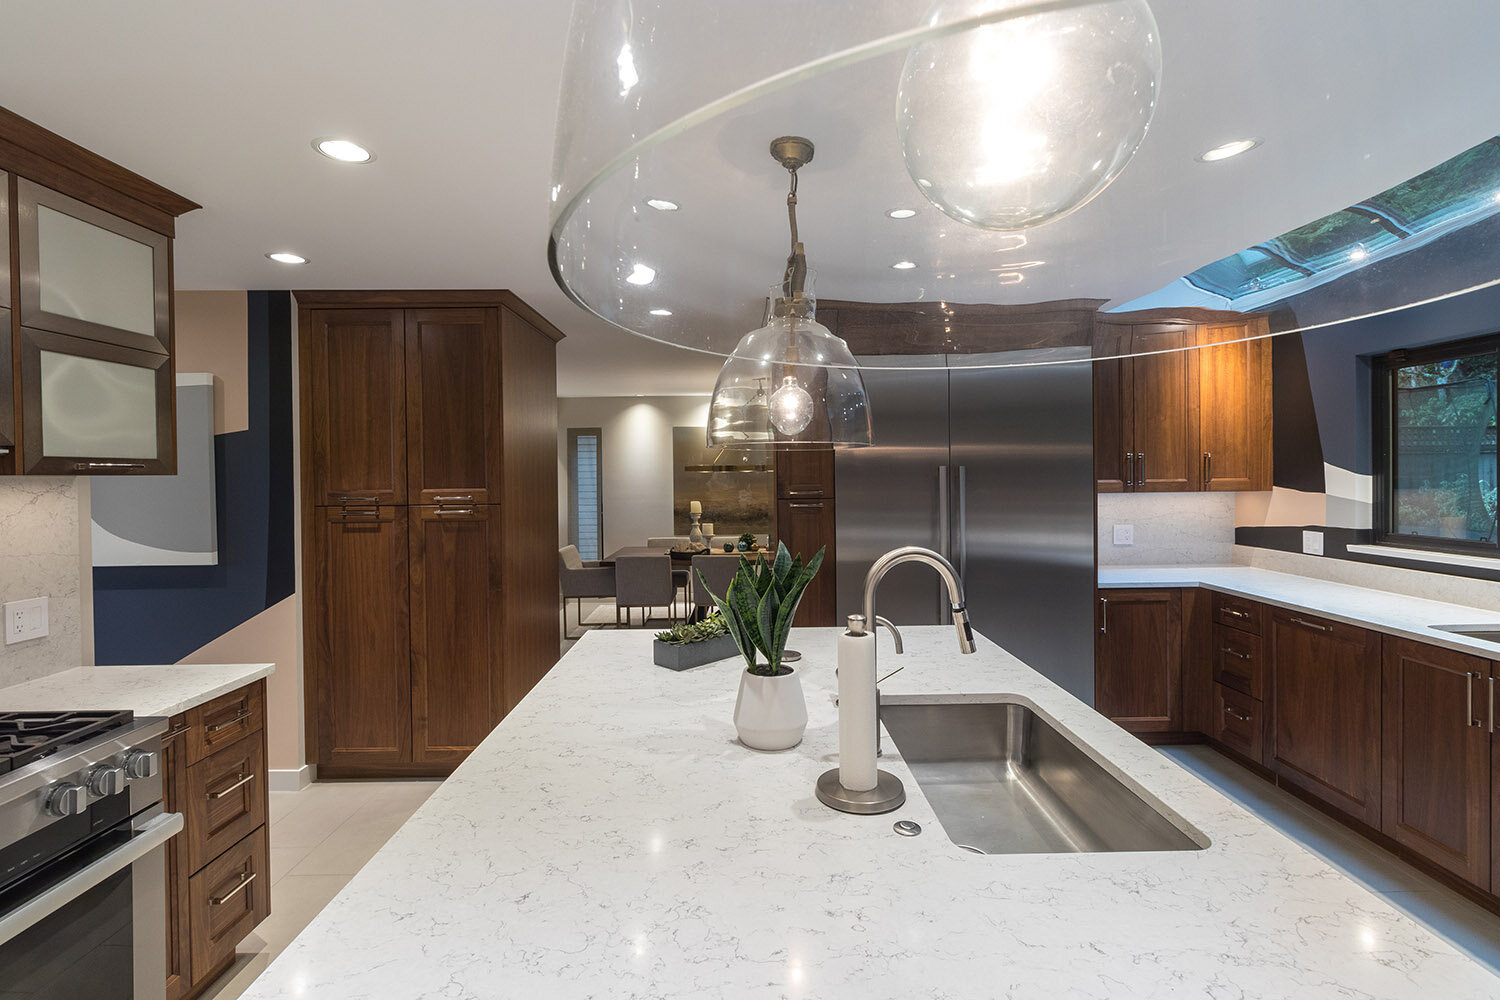 wall-design-decor-kitchen-elegant-custom-design-artful-interior-susan-front-view-2.jpg